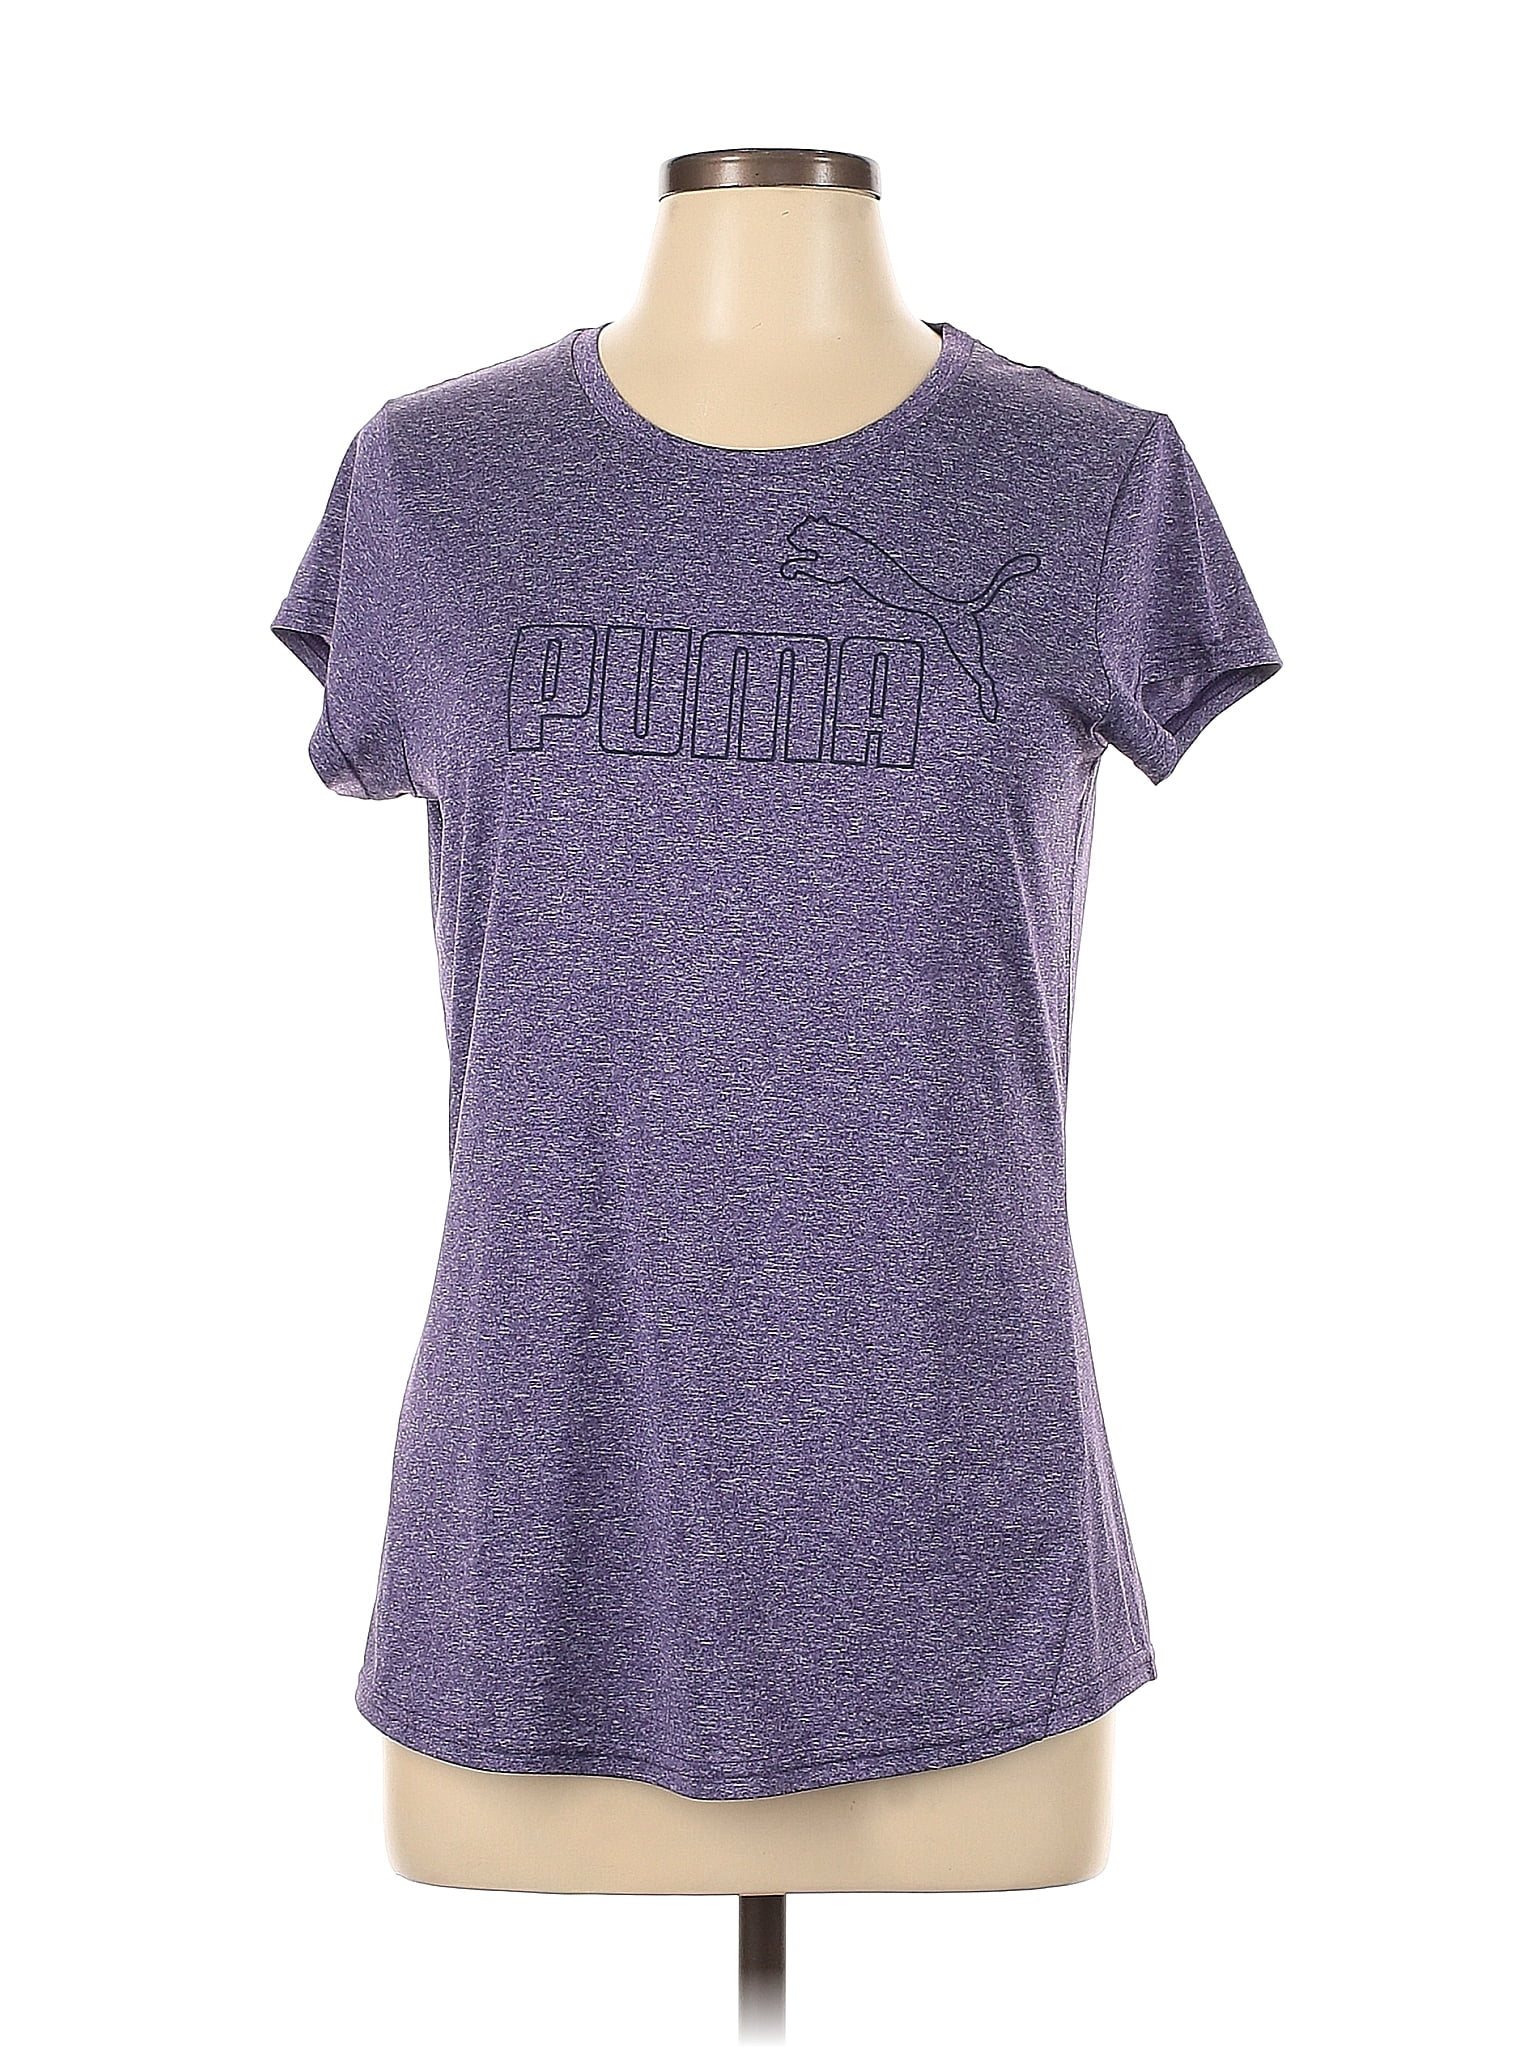 PUMA Womens Run Crew Neck Short Sleeve Athletic Running Athletic Tops  Comfort Technology - Purple, Purple, Xl